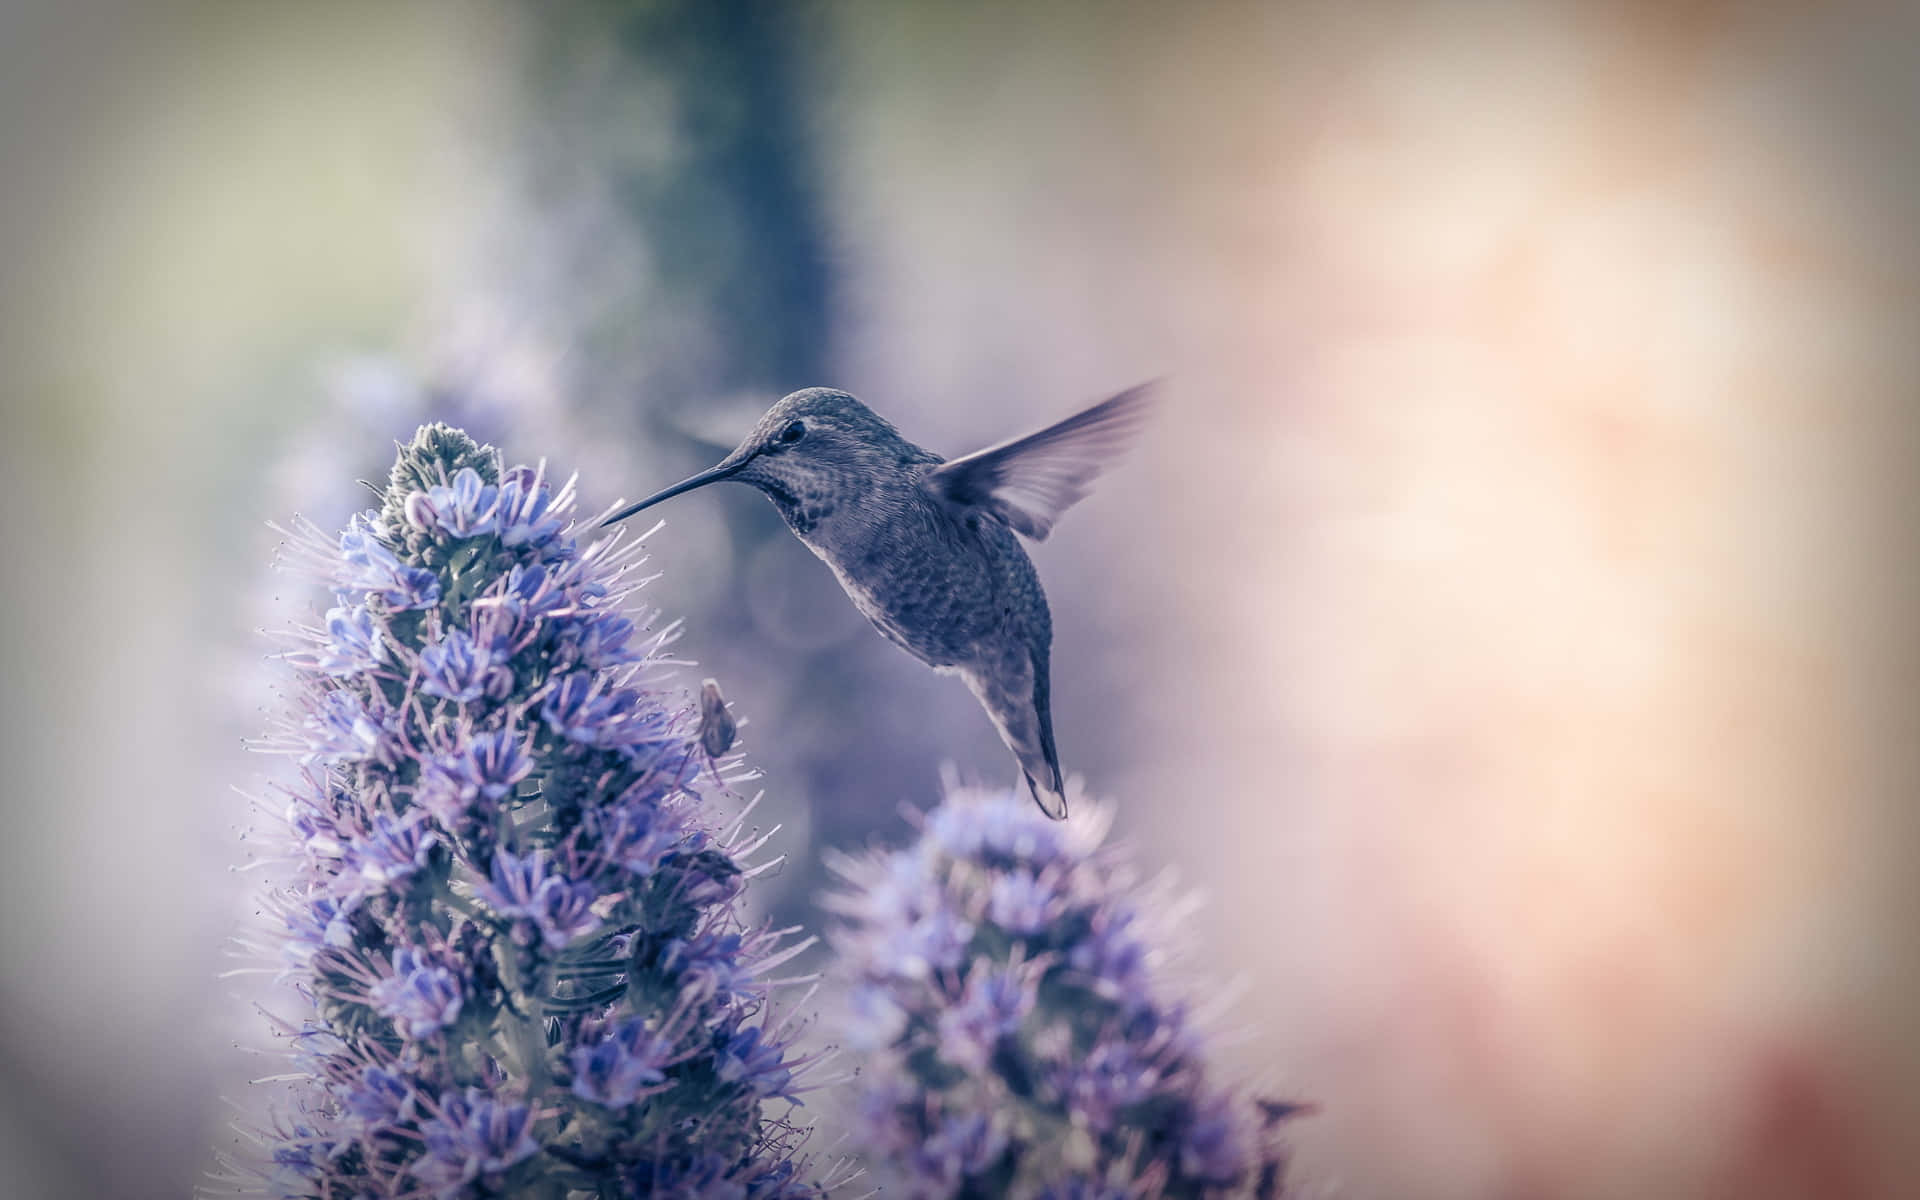 Delightful Hummingbird Feeding From A Flower